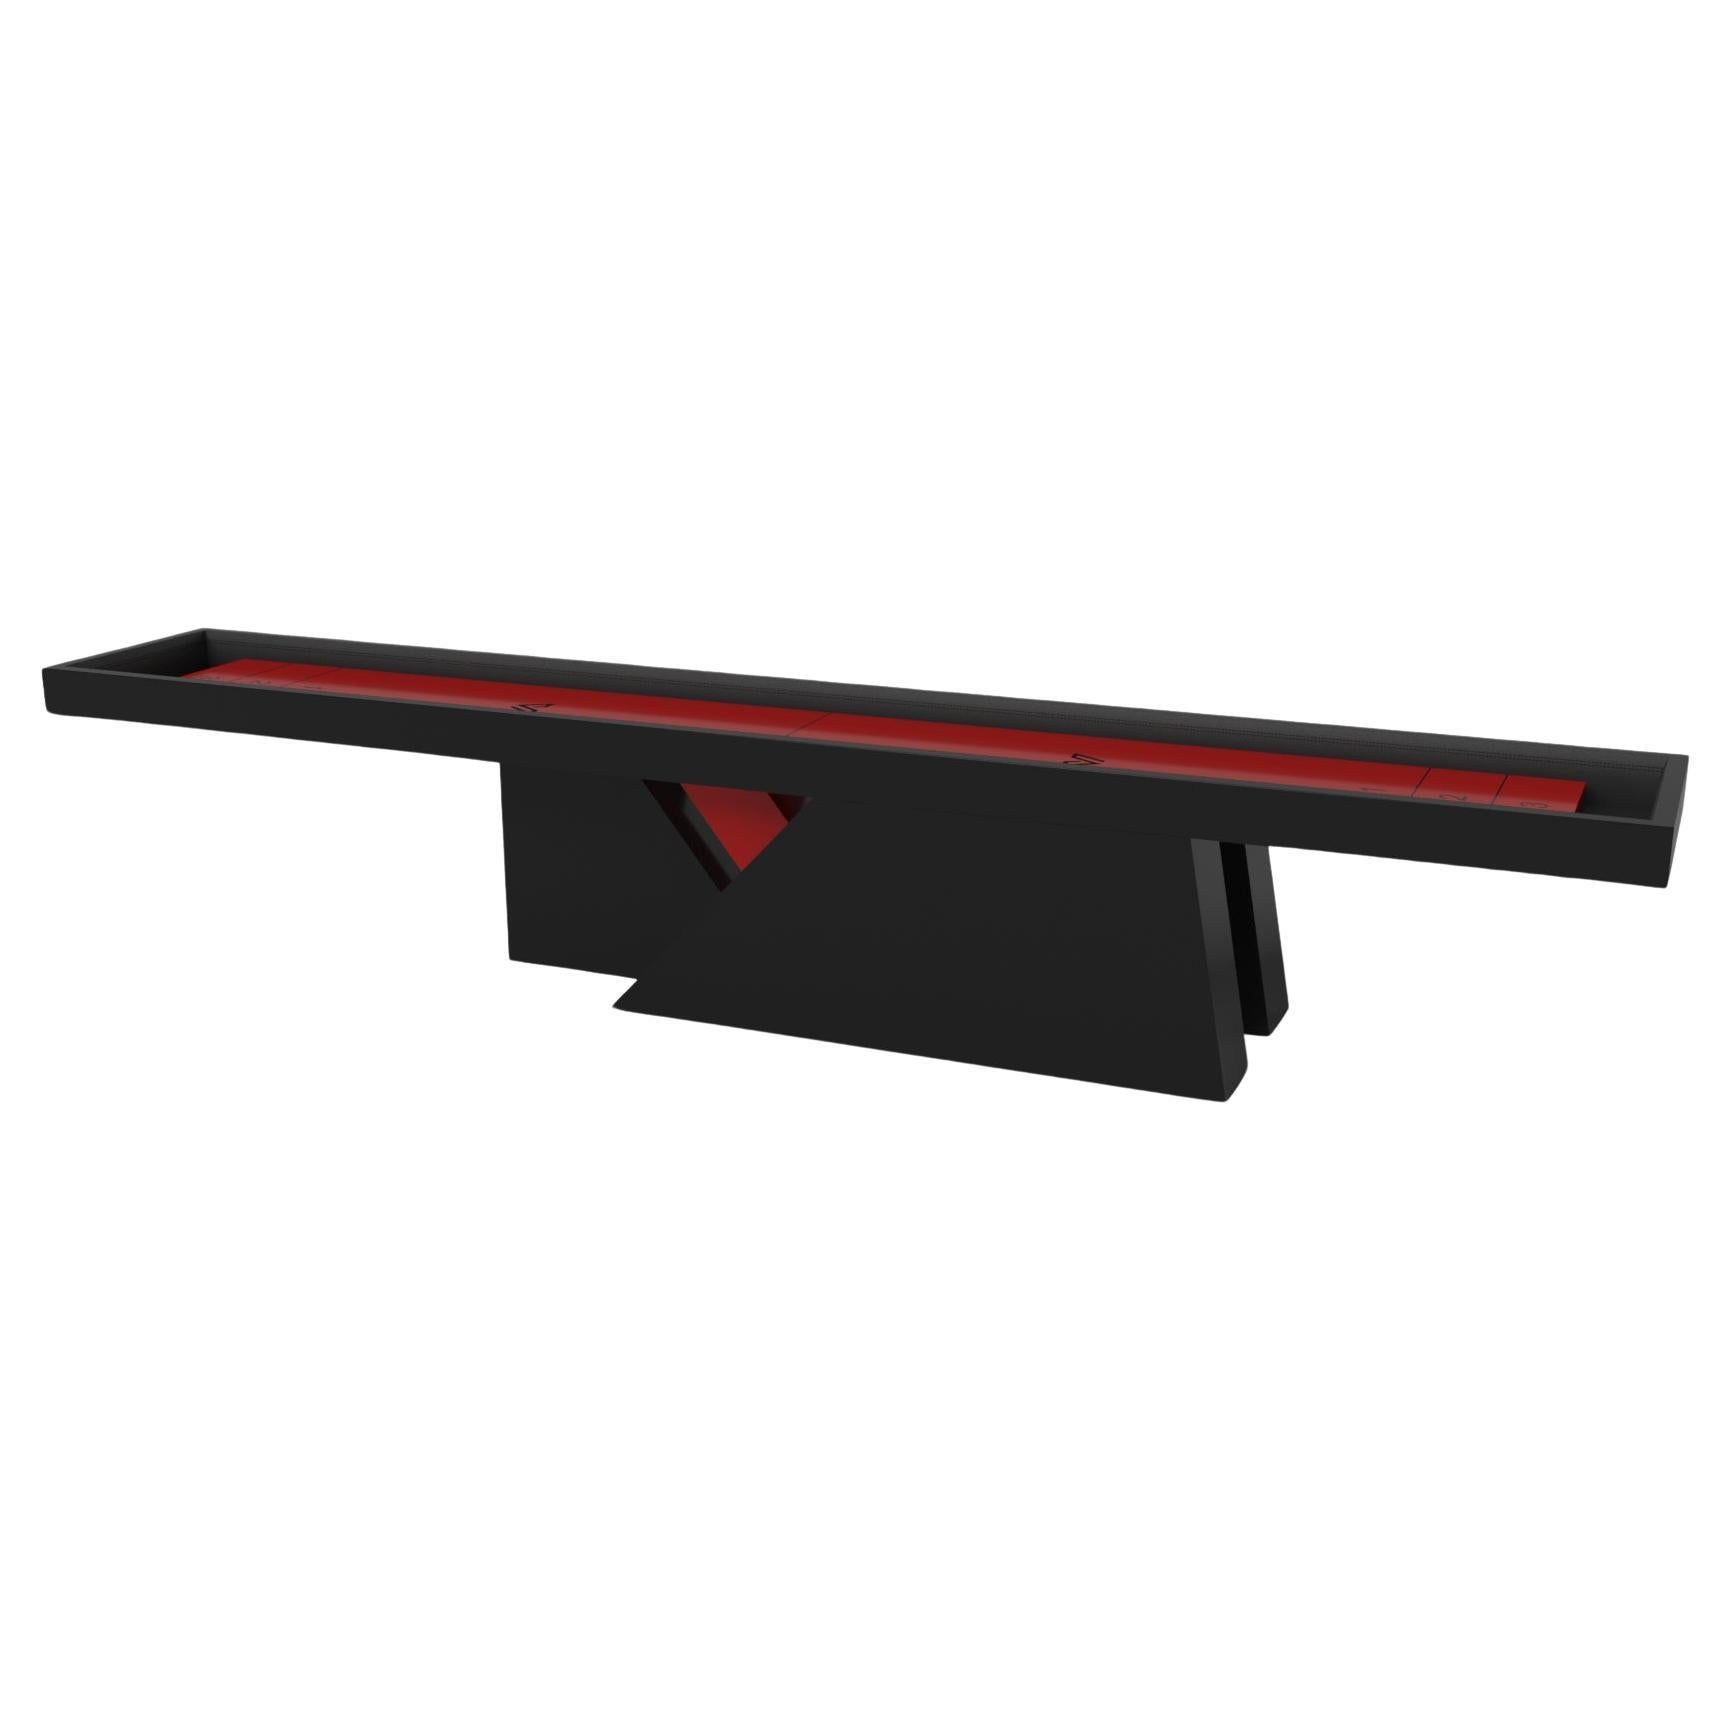 Elevate Customs Stilt Shuffleboard Tables /Solid Pantone Black Color in 12' -USA For Sale